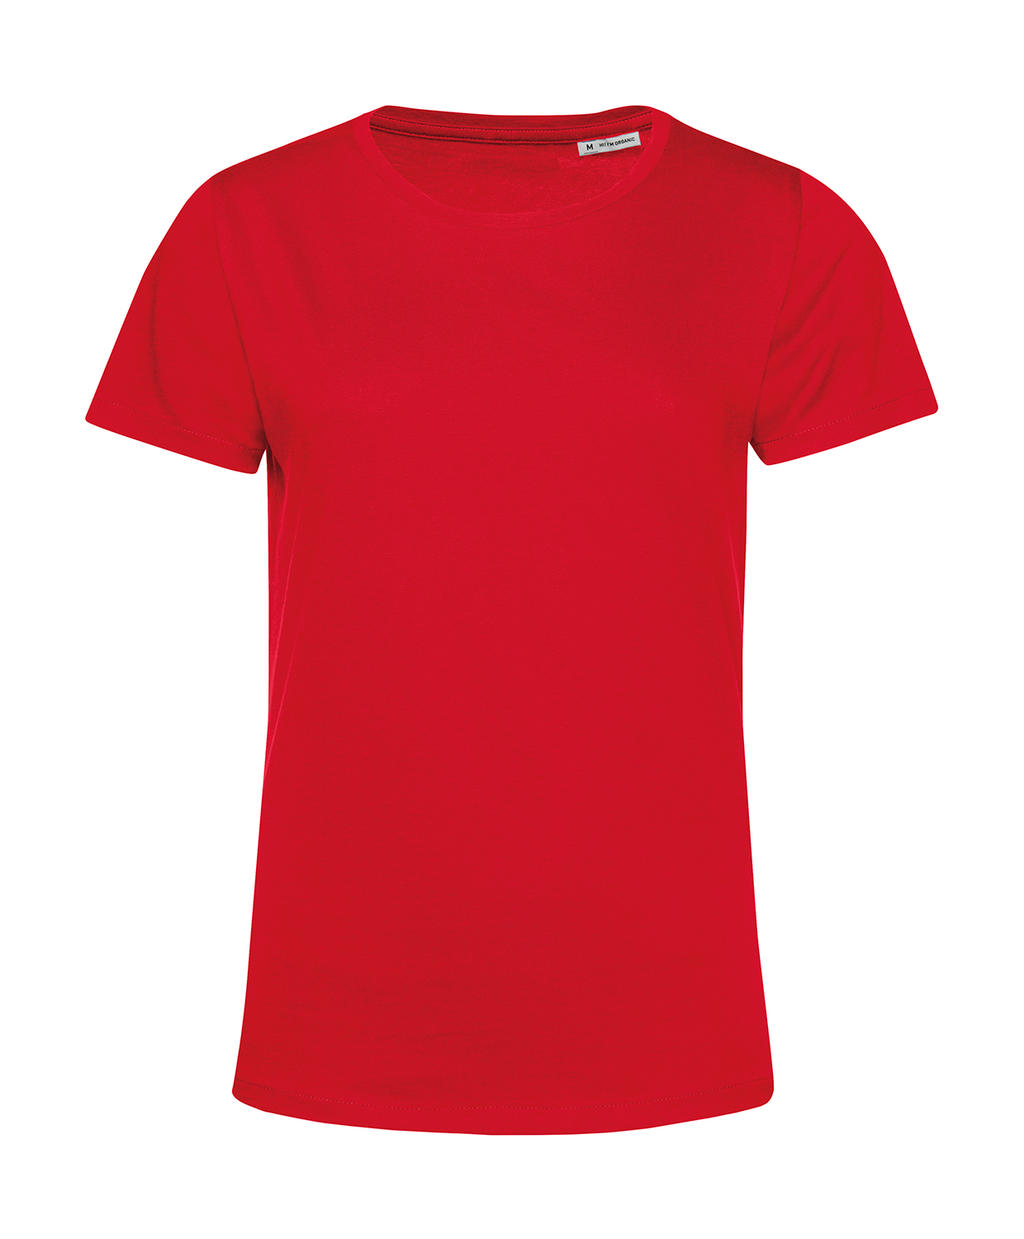 Tričko dámské BC Organic Inspire E150 - červené, 3XL